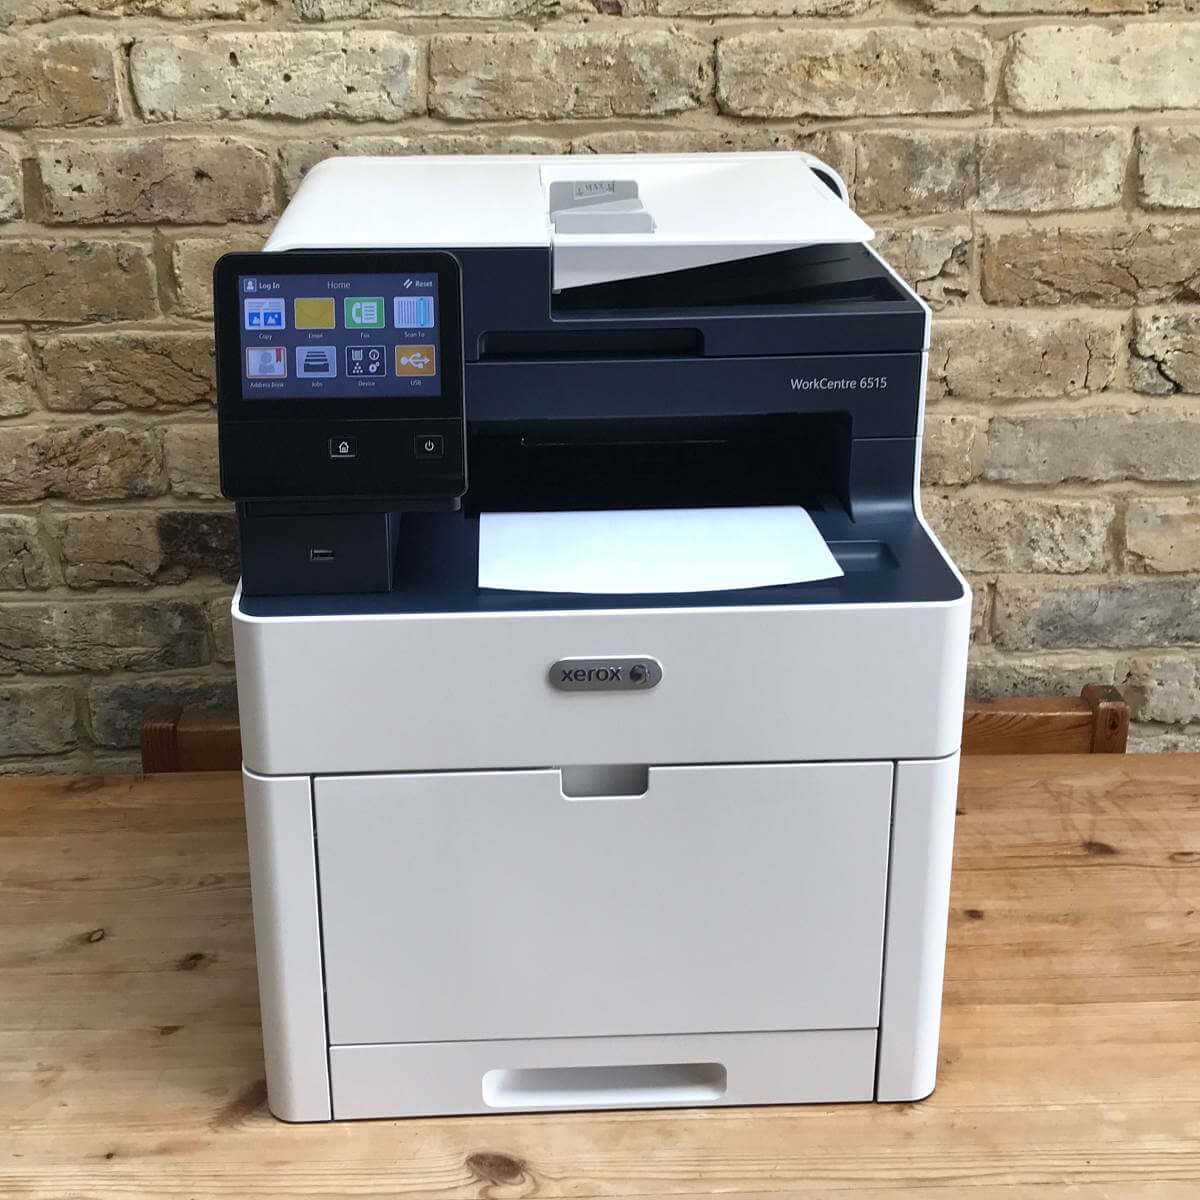 Printer Busy or Error message